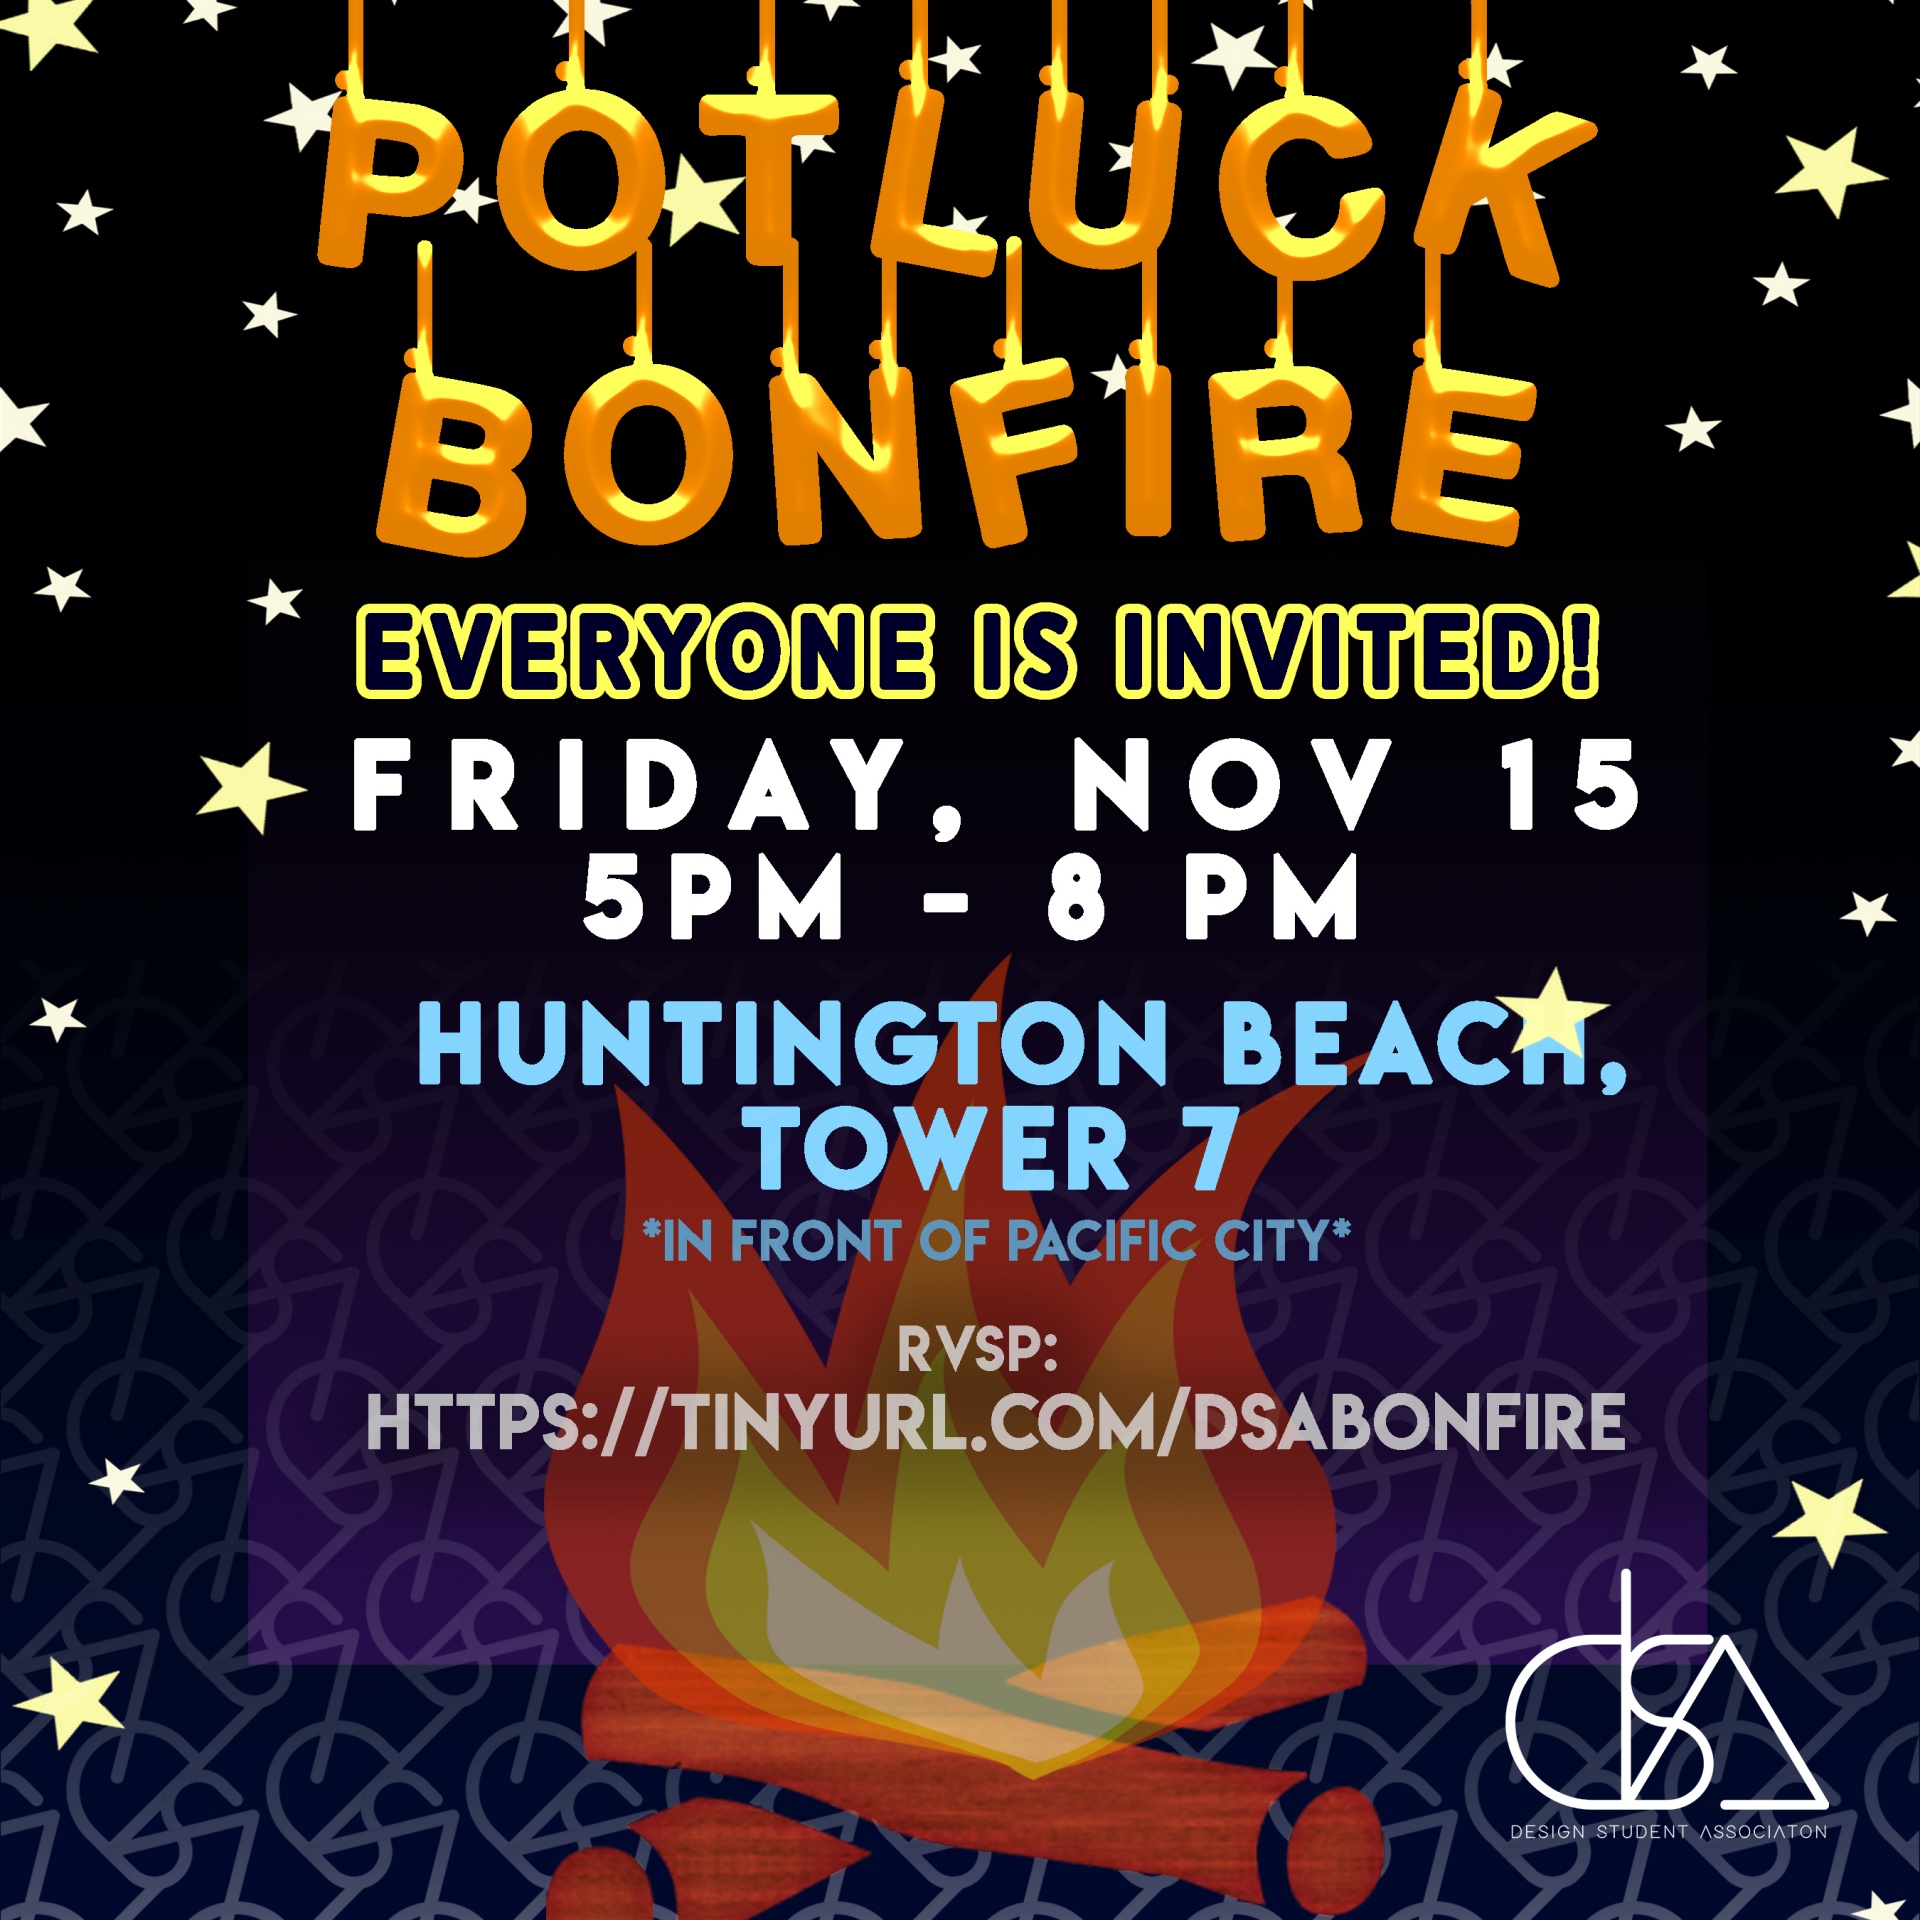 Potluck Bonfire event in Huntington Beach